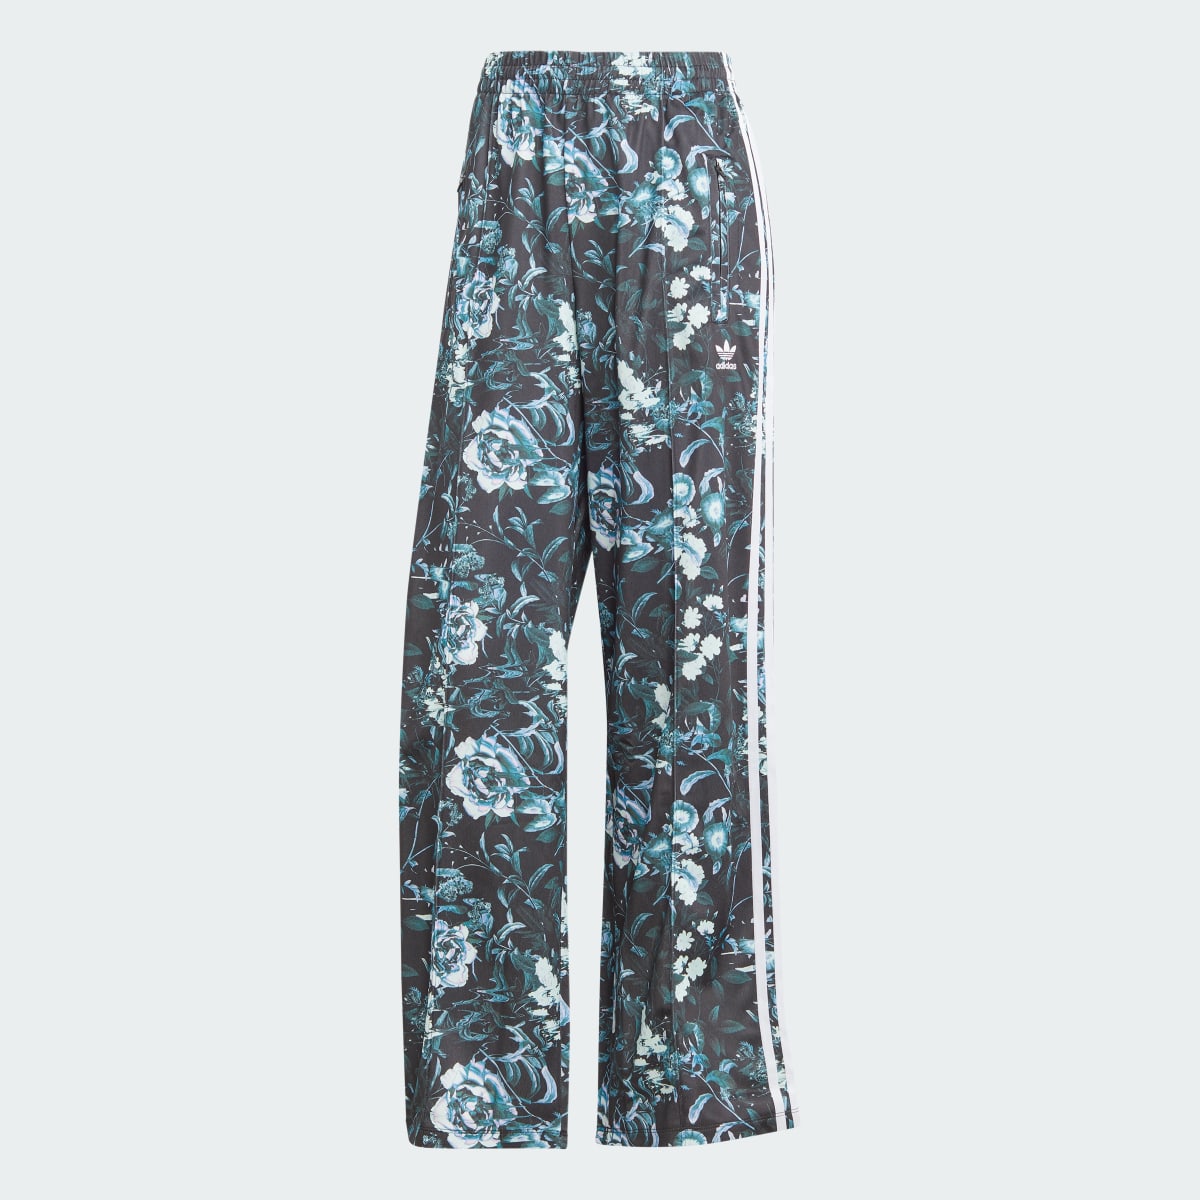 Adidas Pantalon de survêtement floral Firebird. 4